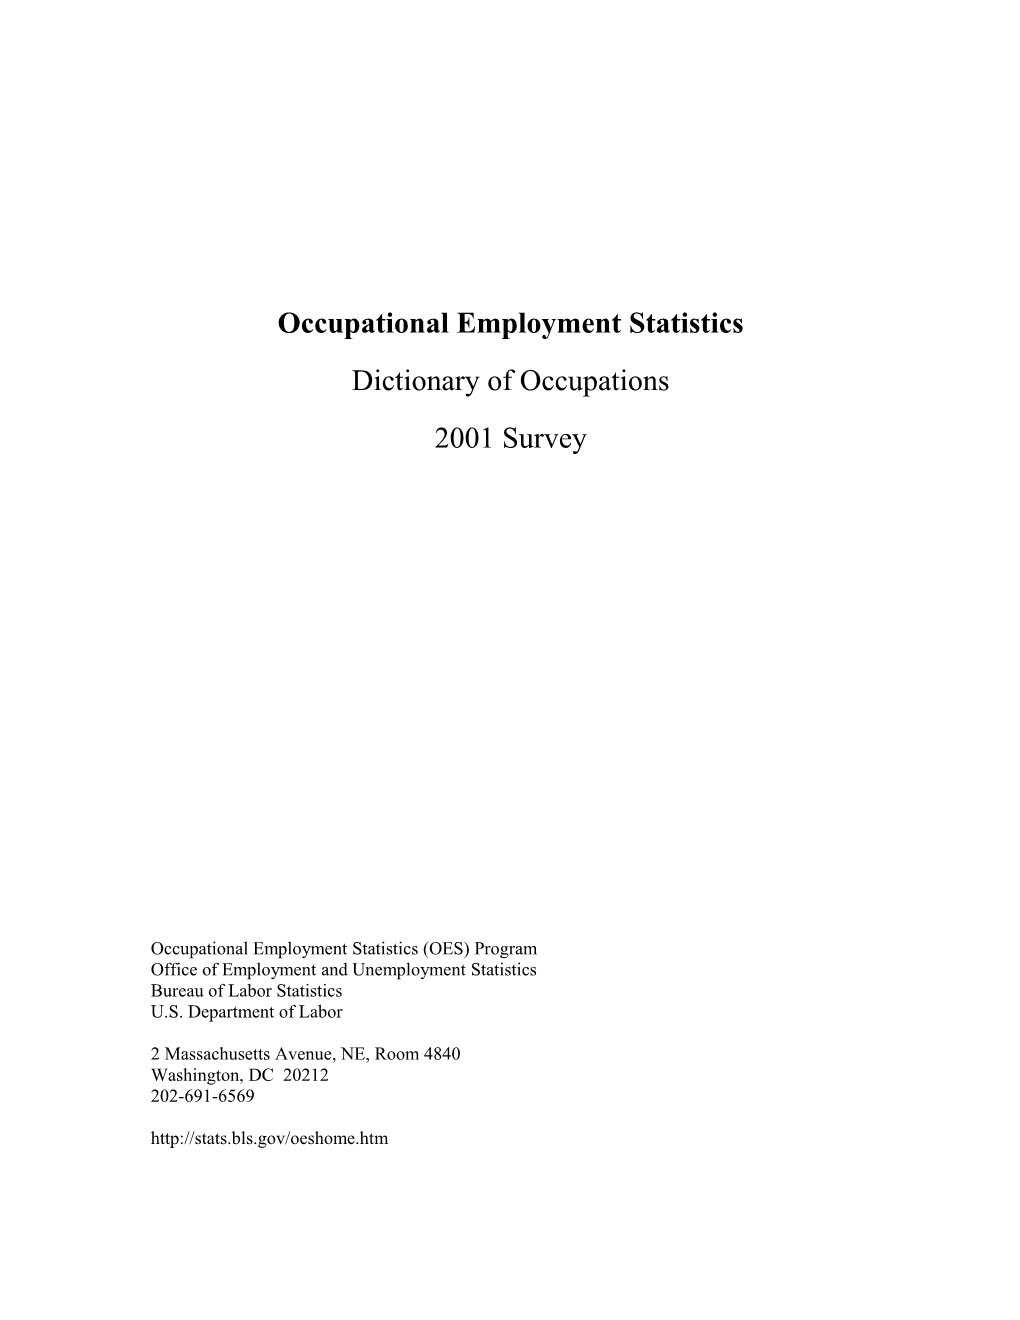 Occupational Employment Statistics Survey Bureau of Labor Statistics